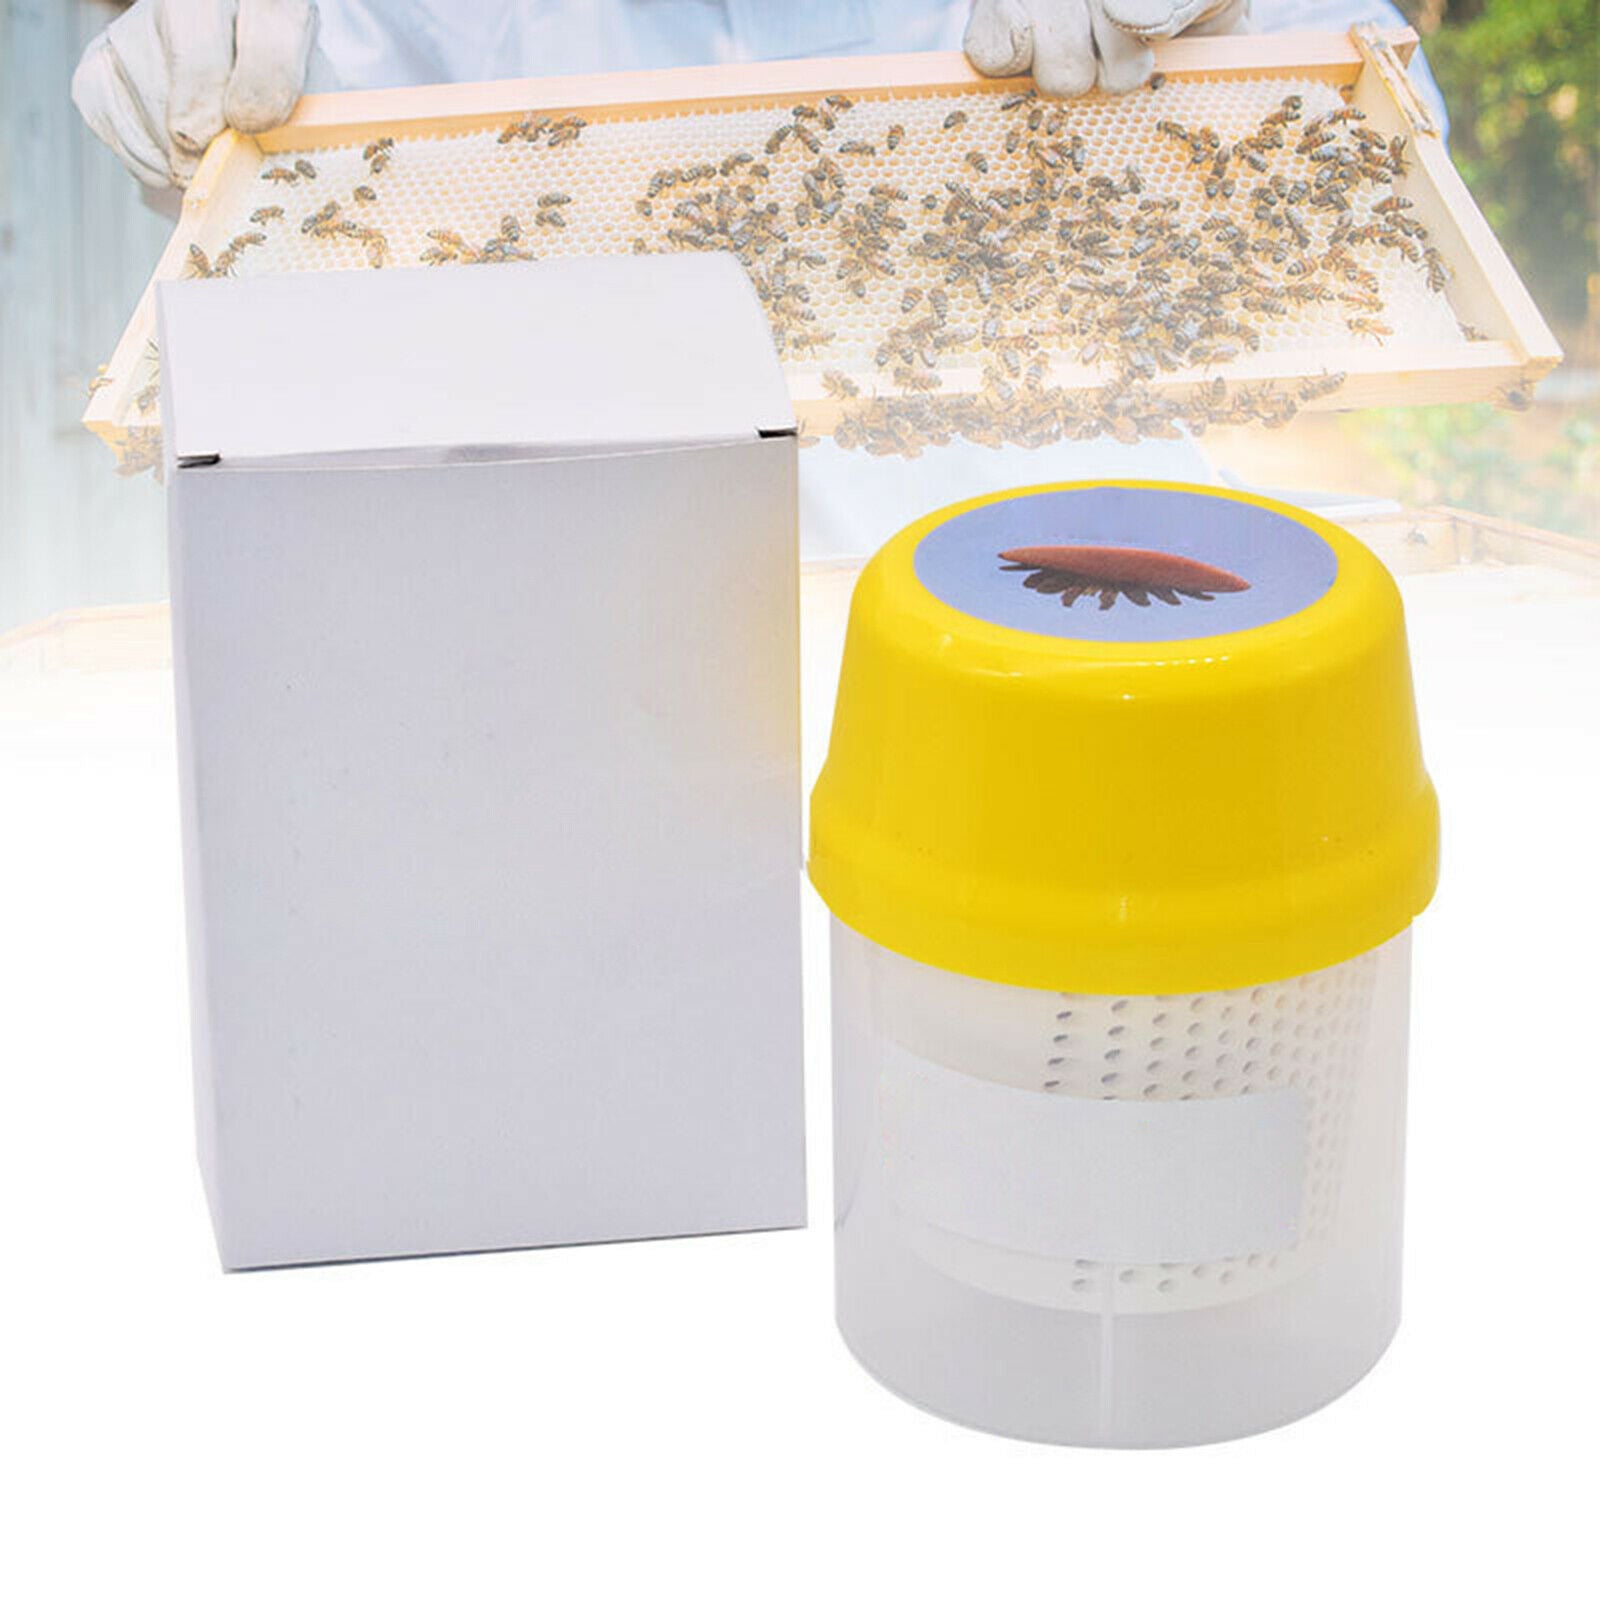 Varroa Shaker Mite Killer Monitoring Bottle Beekeeper Bees Equipment Tool